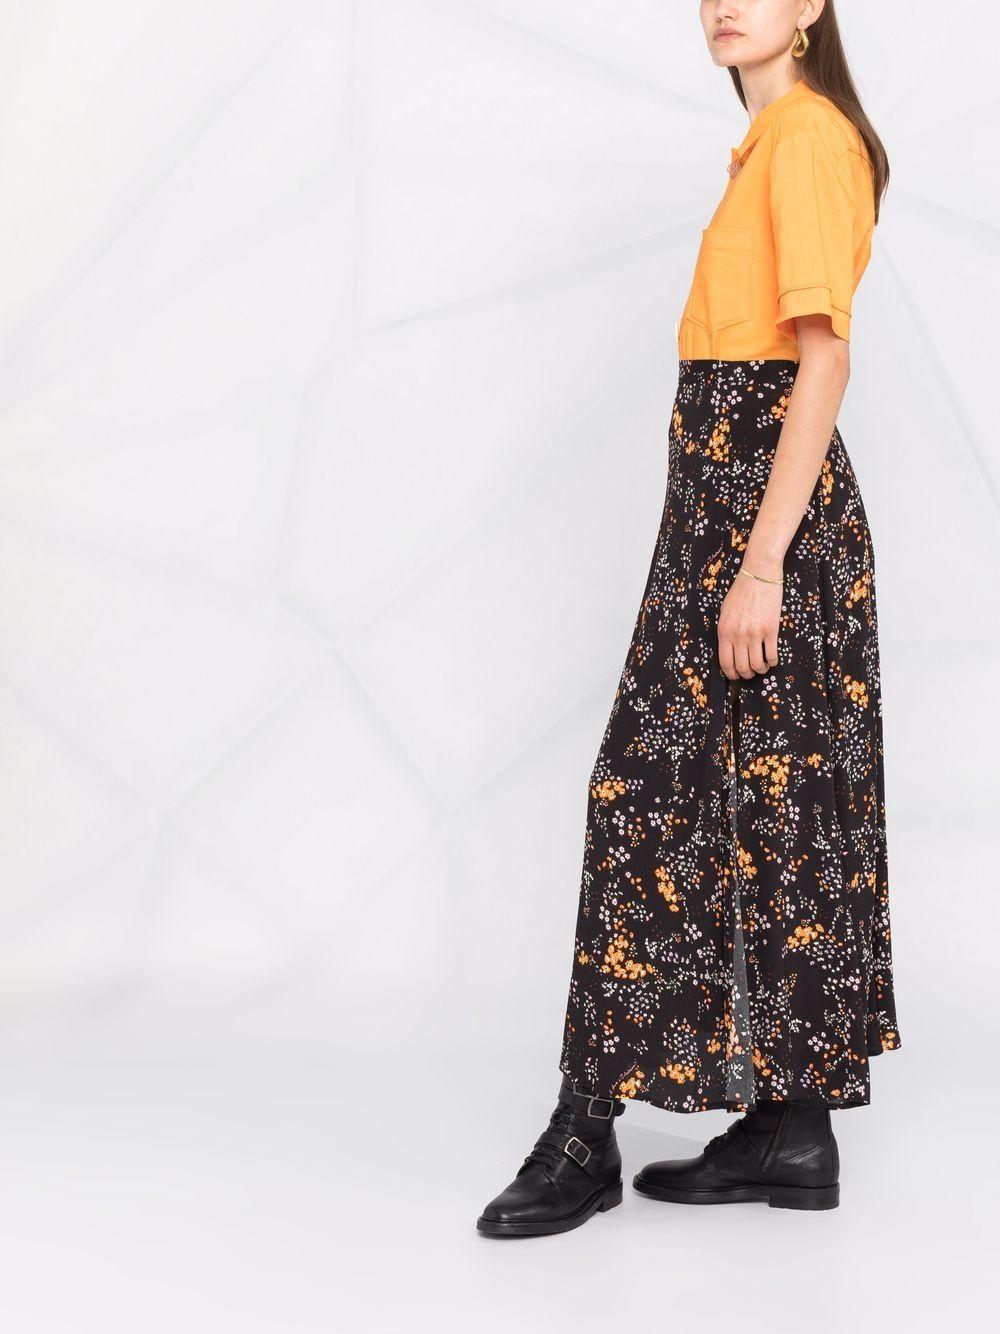 Zadig & Voltaire Judith Spark Floral Print Skirt in Black | Lyst